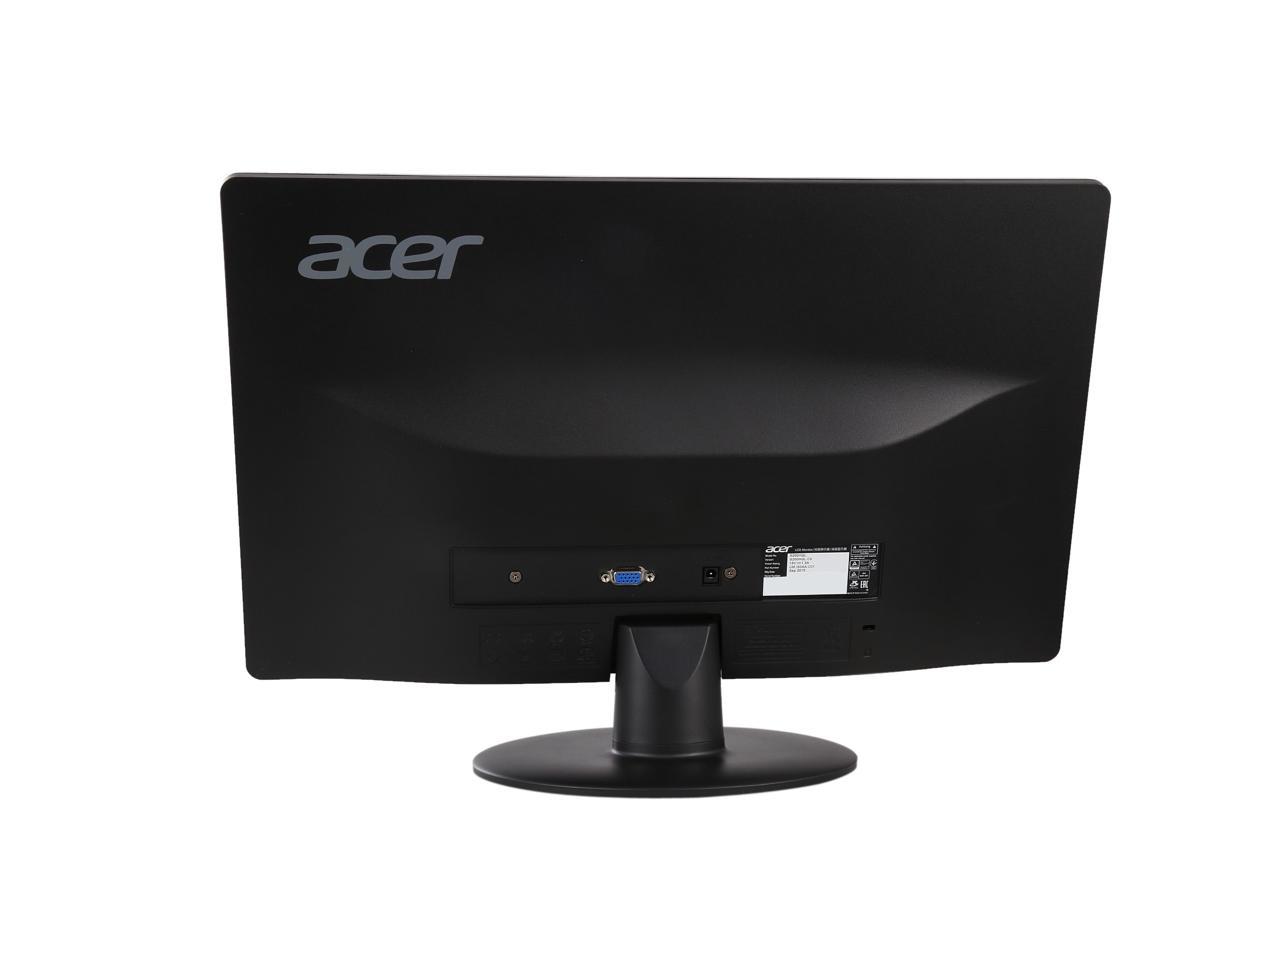 Acer S200HQL 19.5" 1600 x 900 60 Hz D-Sub LCD Monitor - Newegg.com